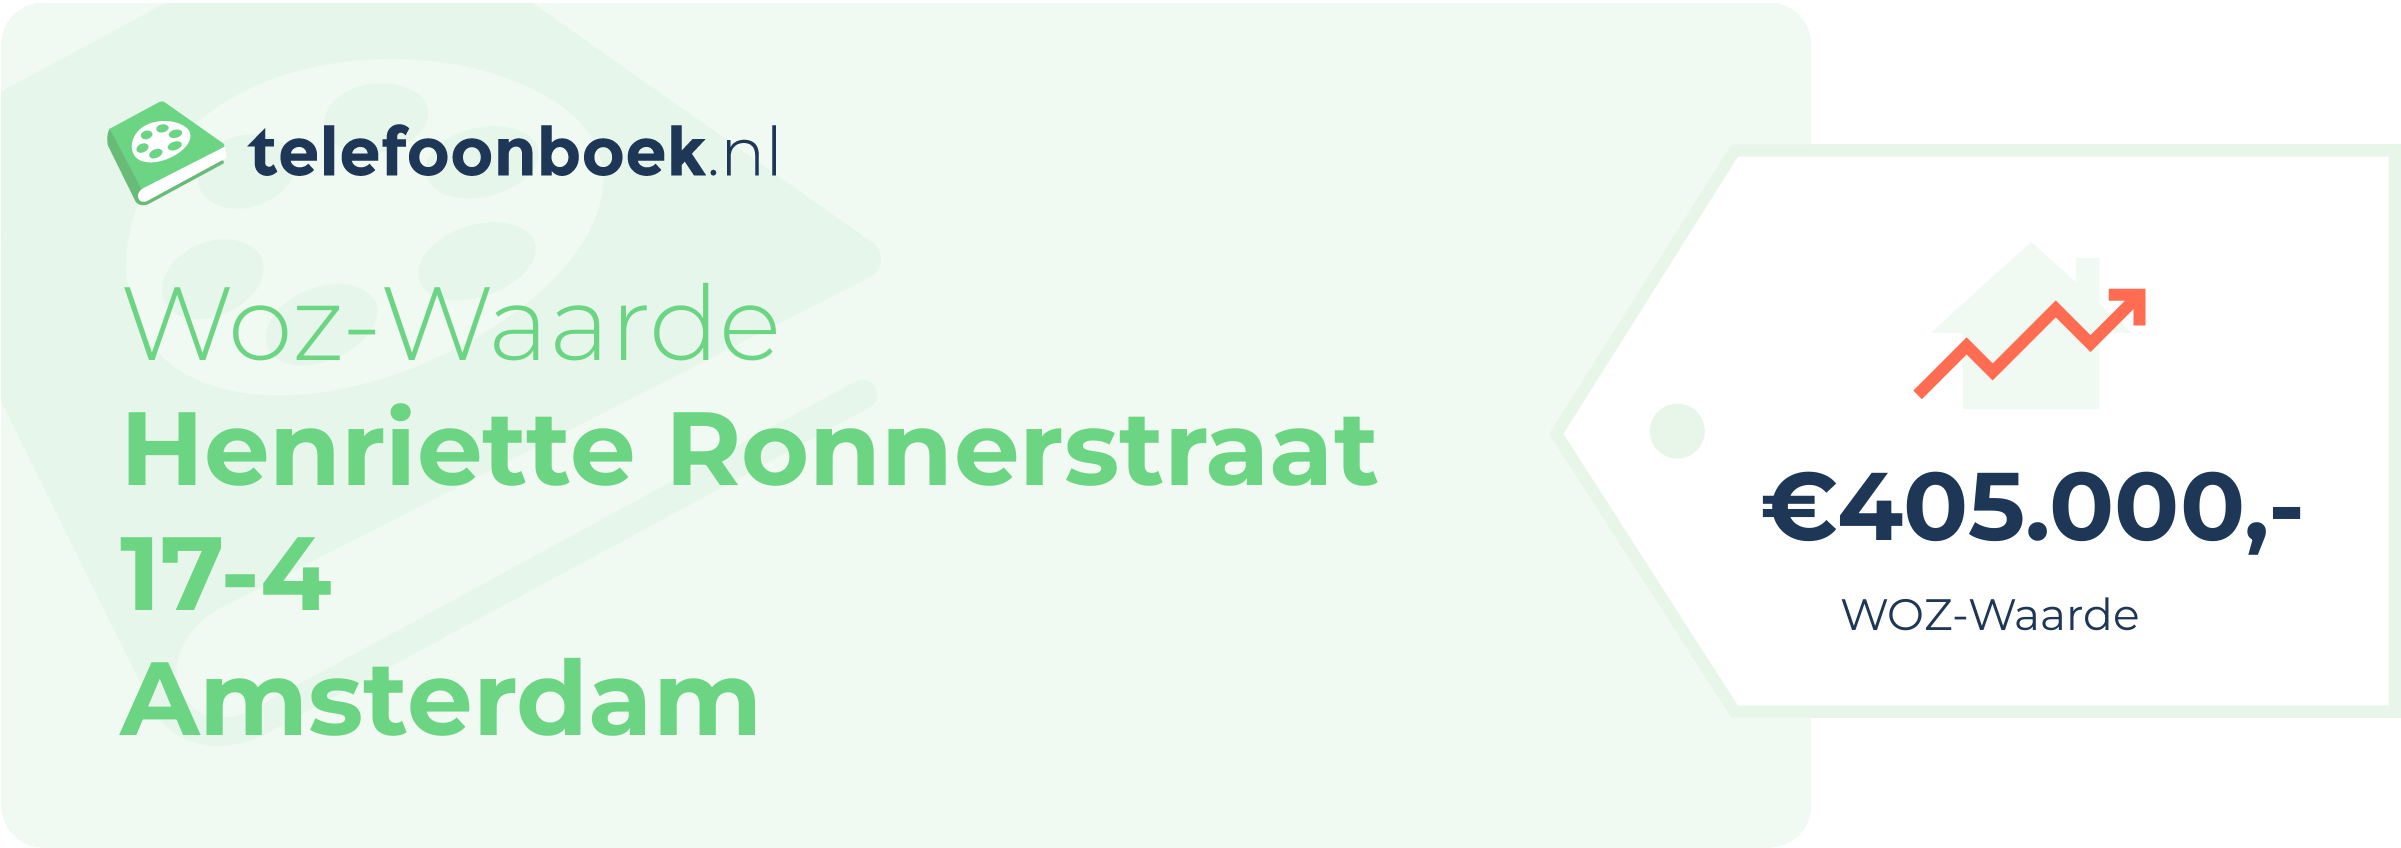 WOZ-waarde Henriette Ronnerstraat 17-4 Amsterdam